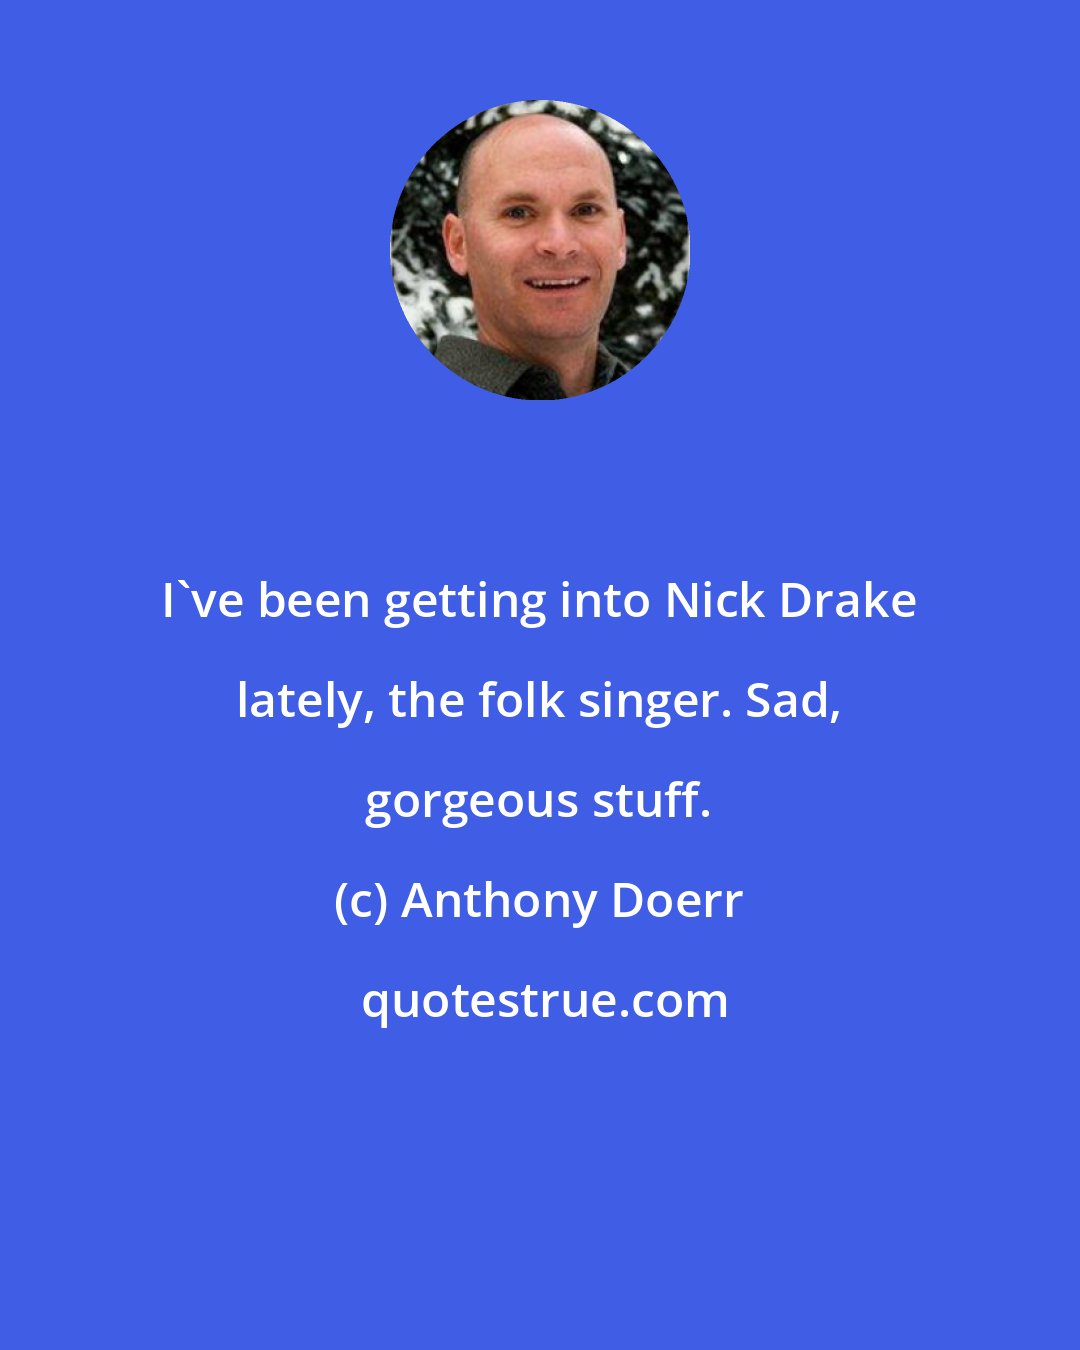 Anthony Doerr: I've been getting into Nick Drake lately, the folk singer. Sad, gorgeous stuff.